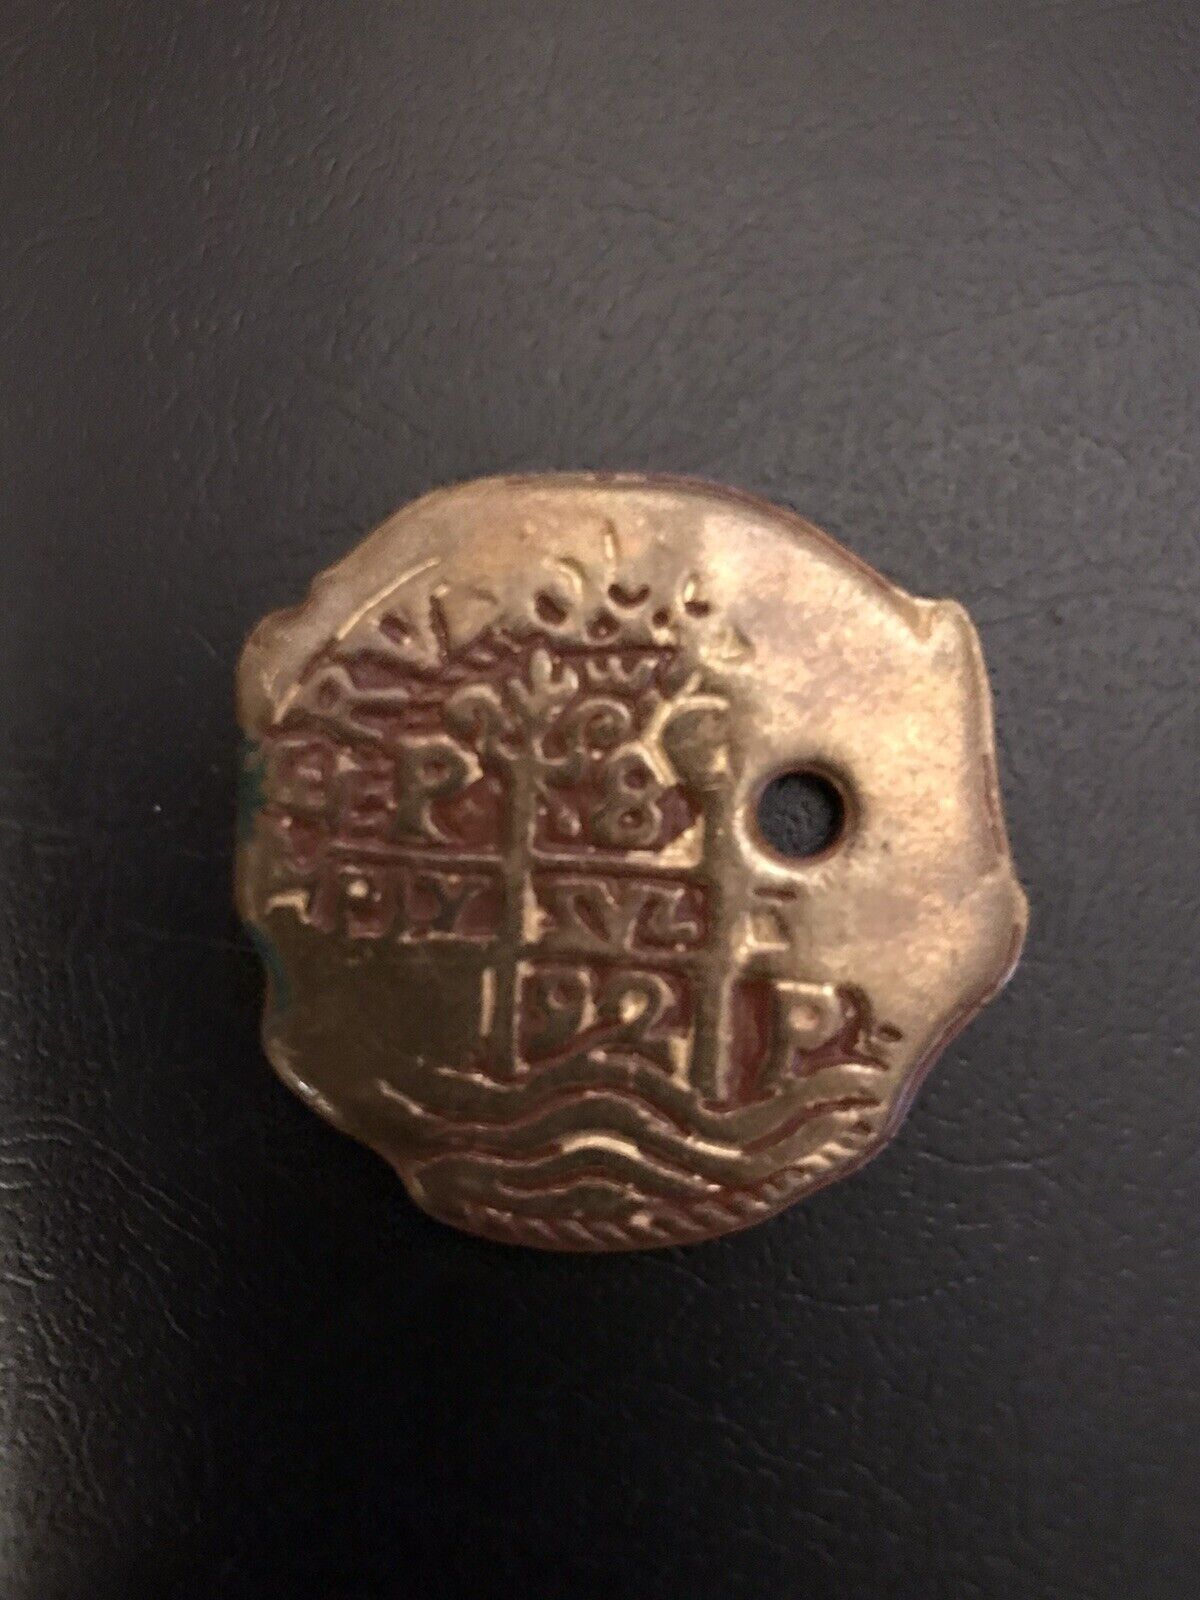 WALT DISNEY WORLD'S PIRATES OF THE CARRIBEAN Pieces of Eight Souvenir Coin